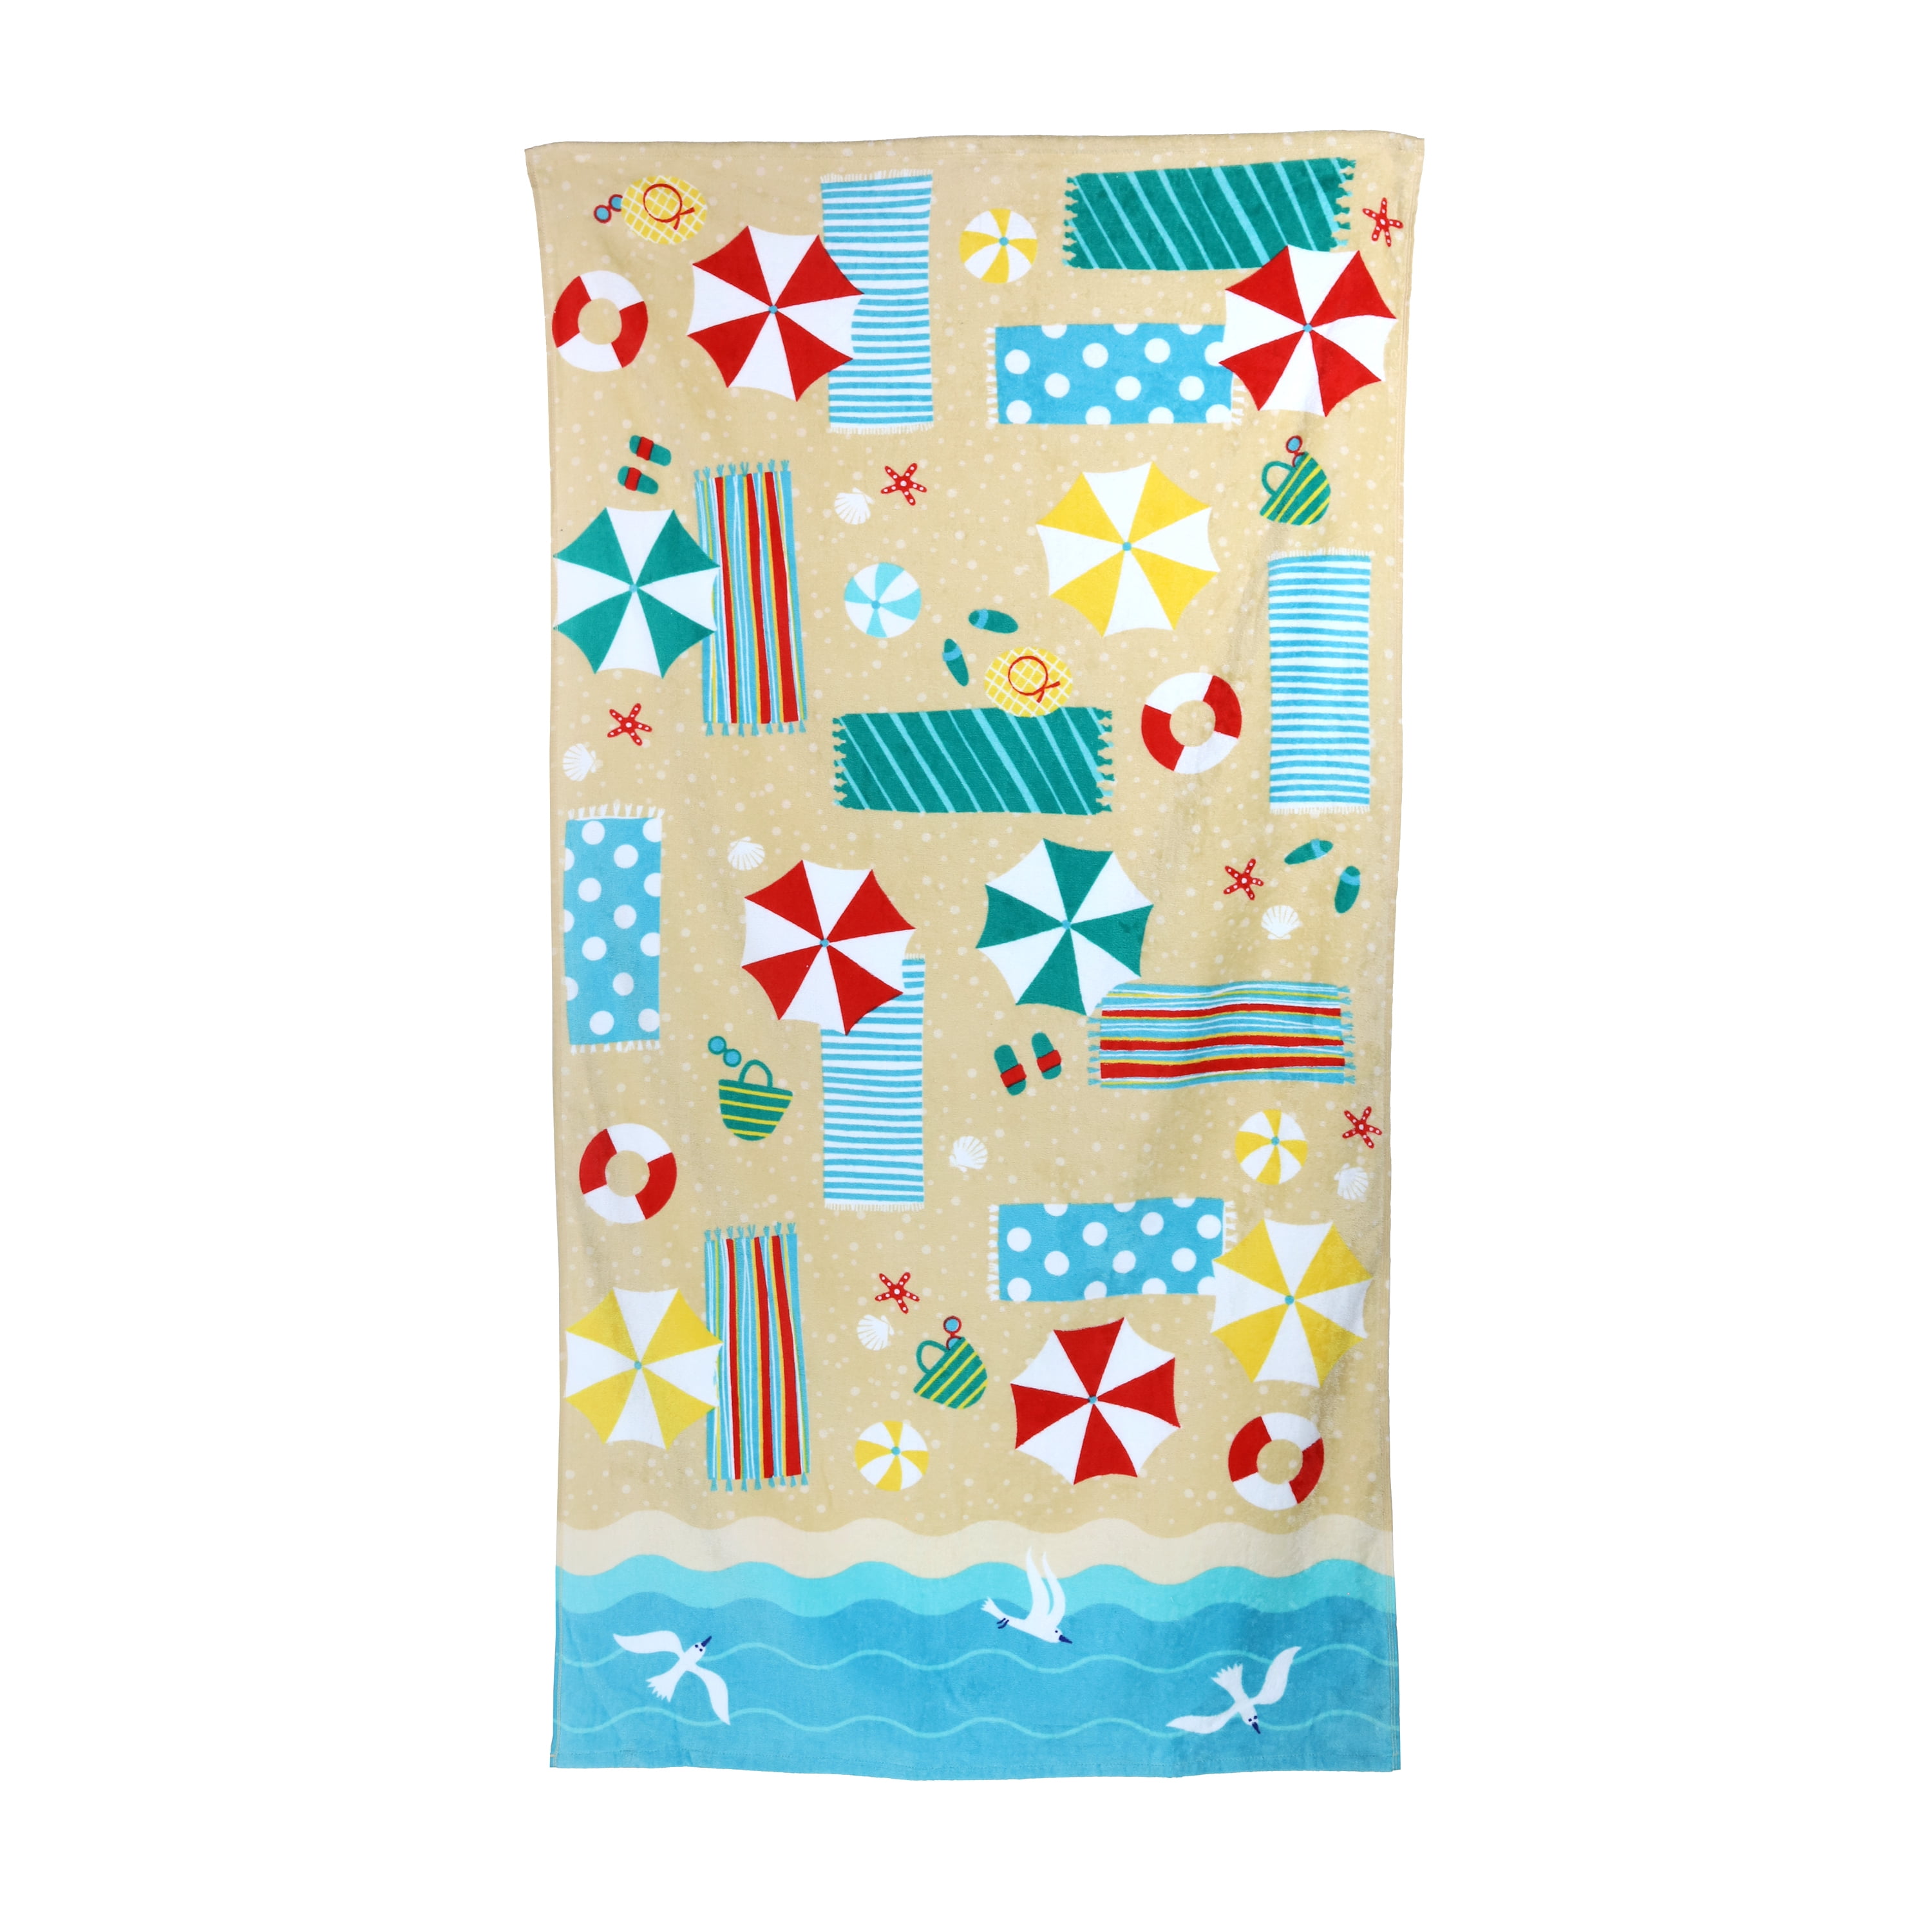 Mermaid Tail Print Mainstays Beach Towel 